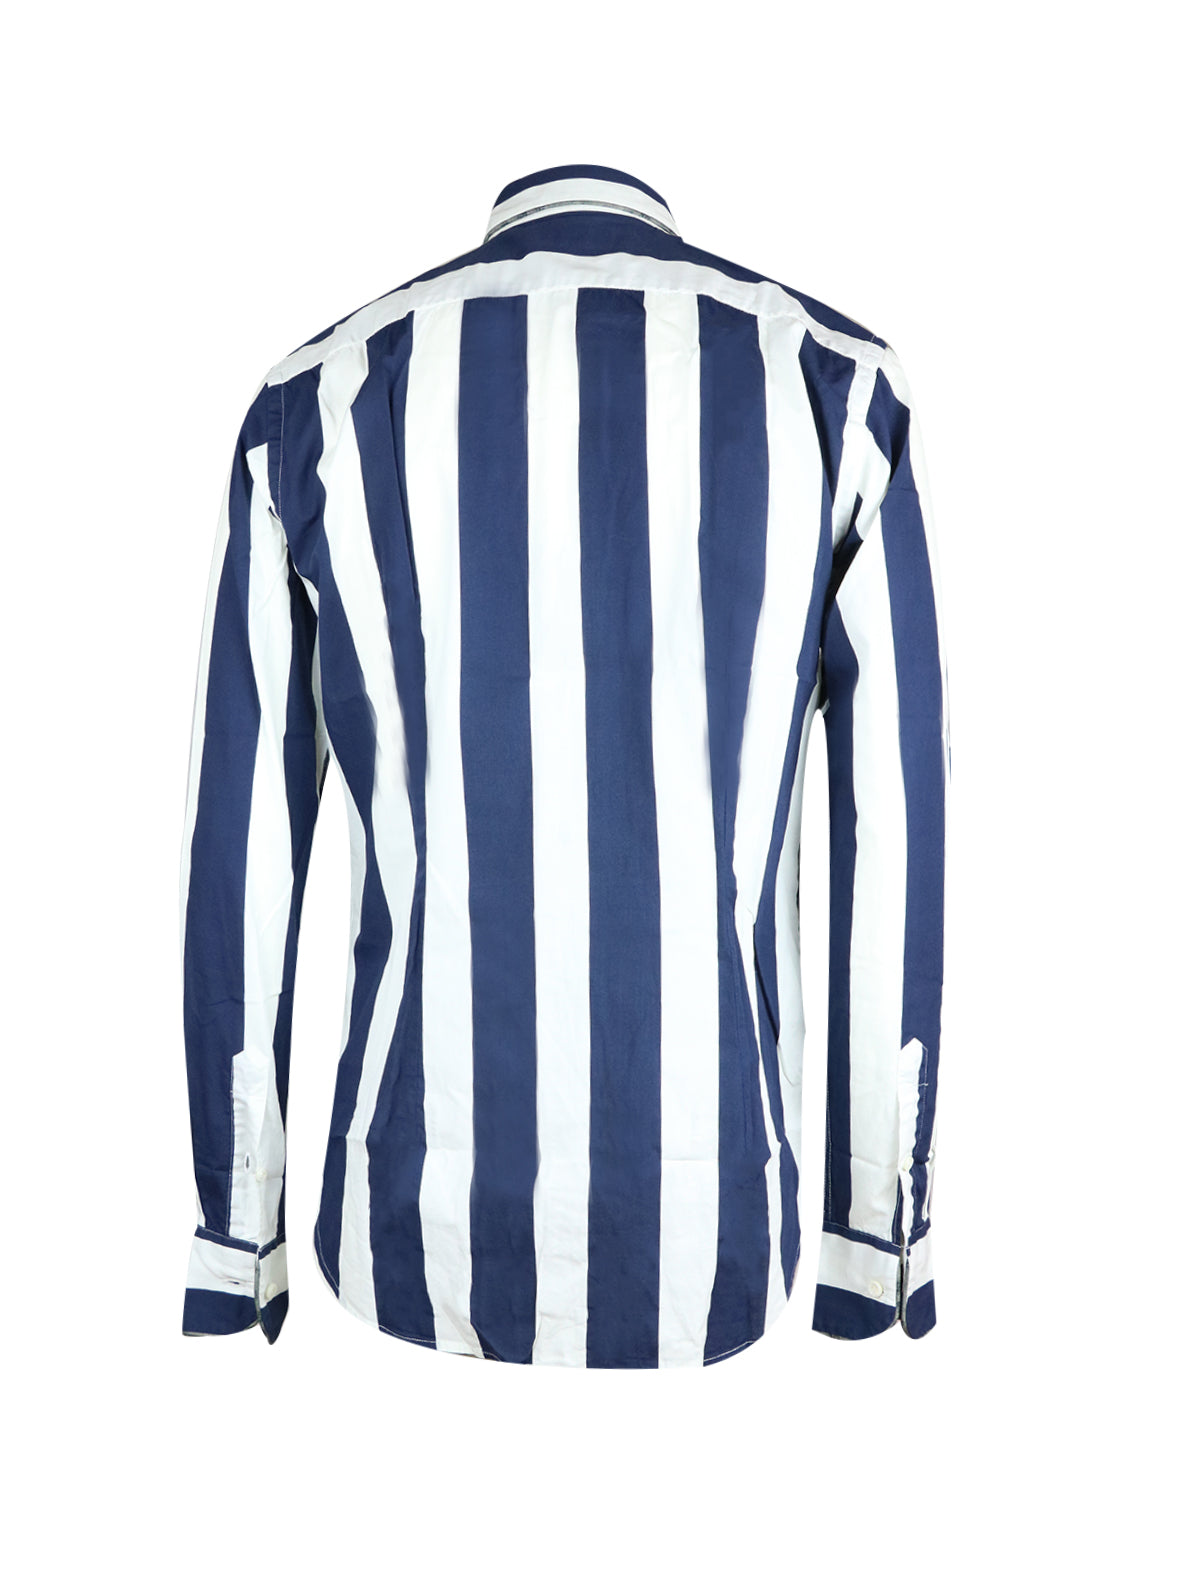 Gabriele Pasini Bold Striped Shirt in Navy/White